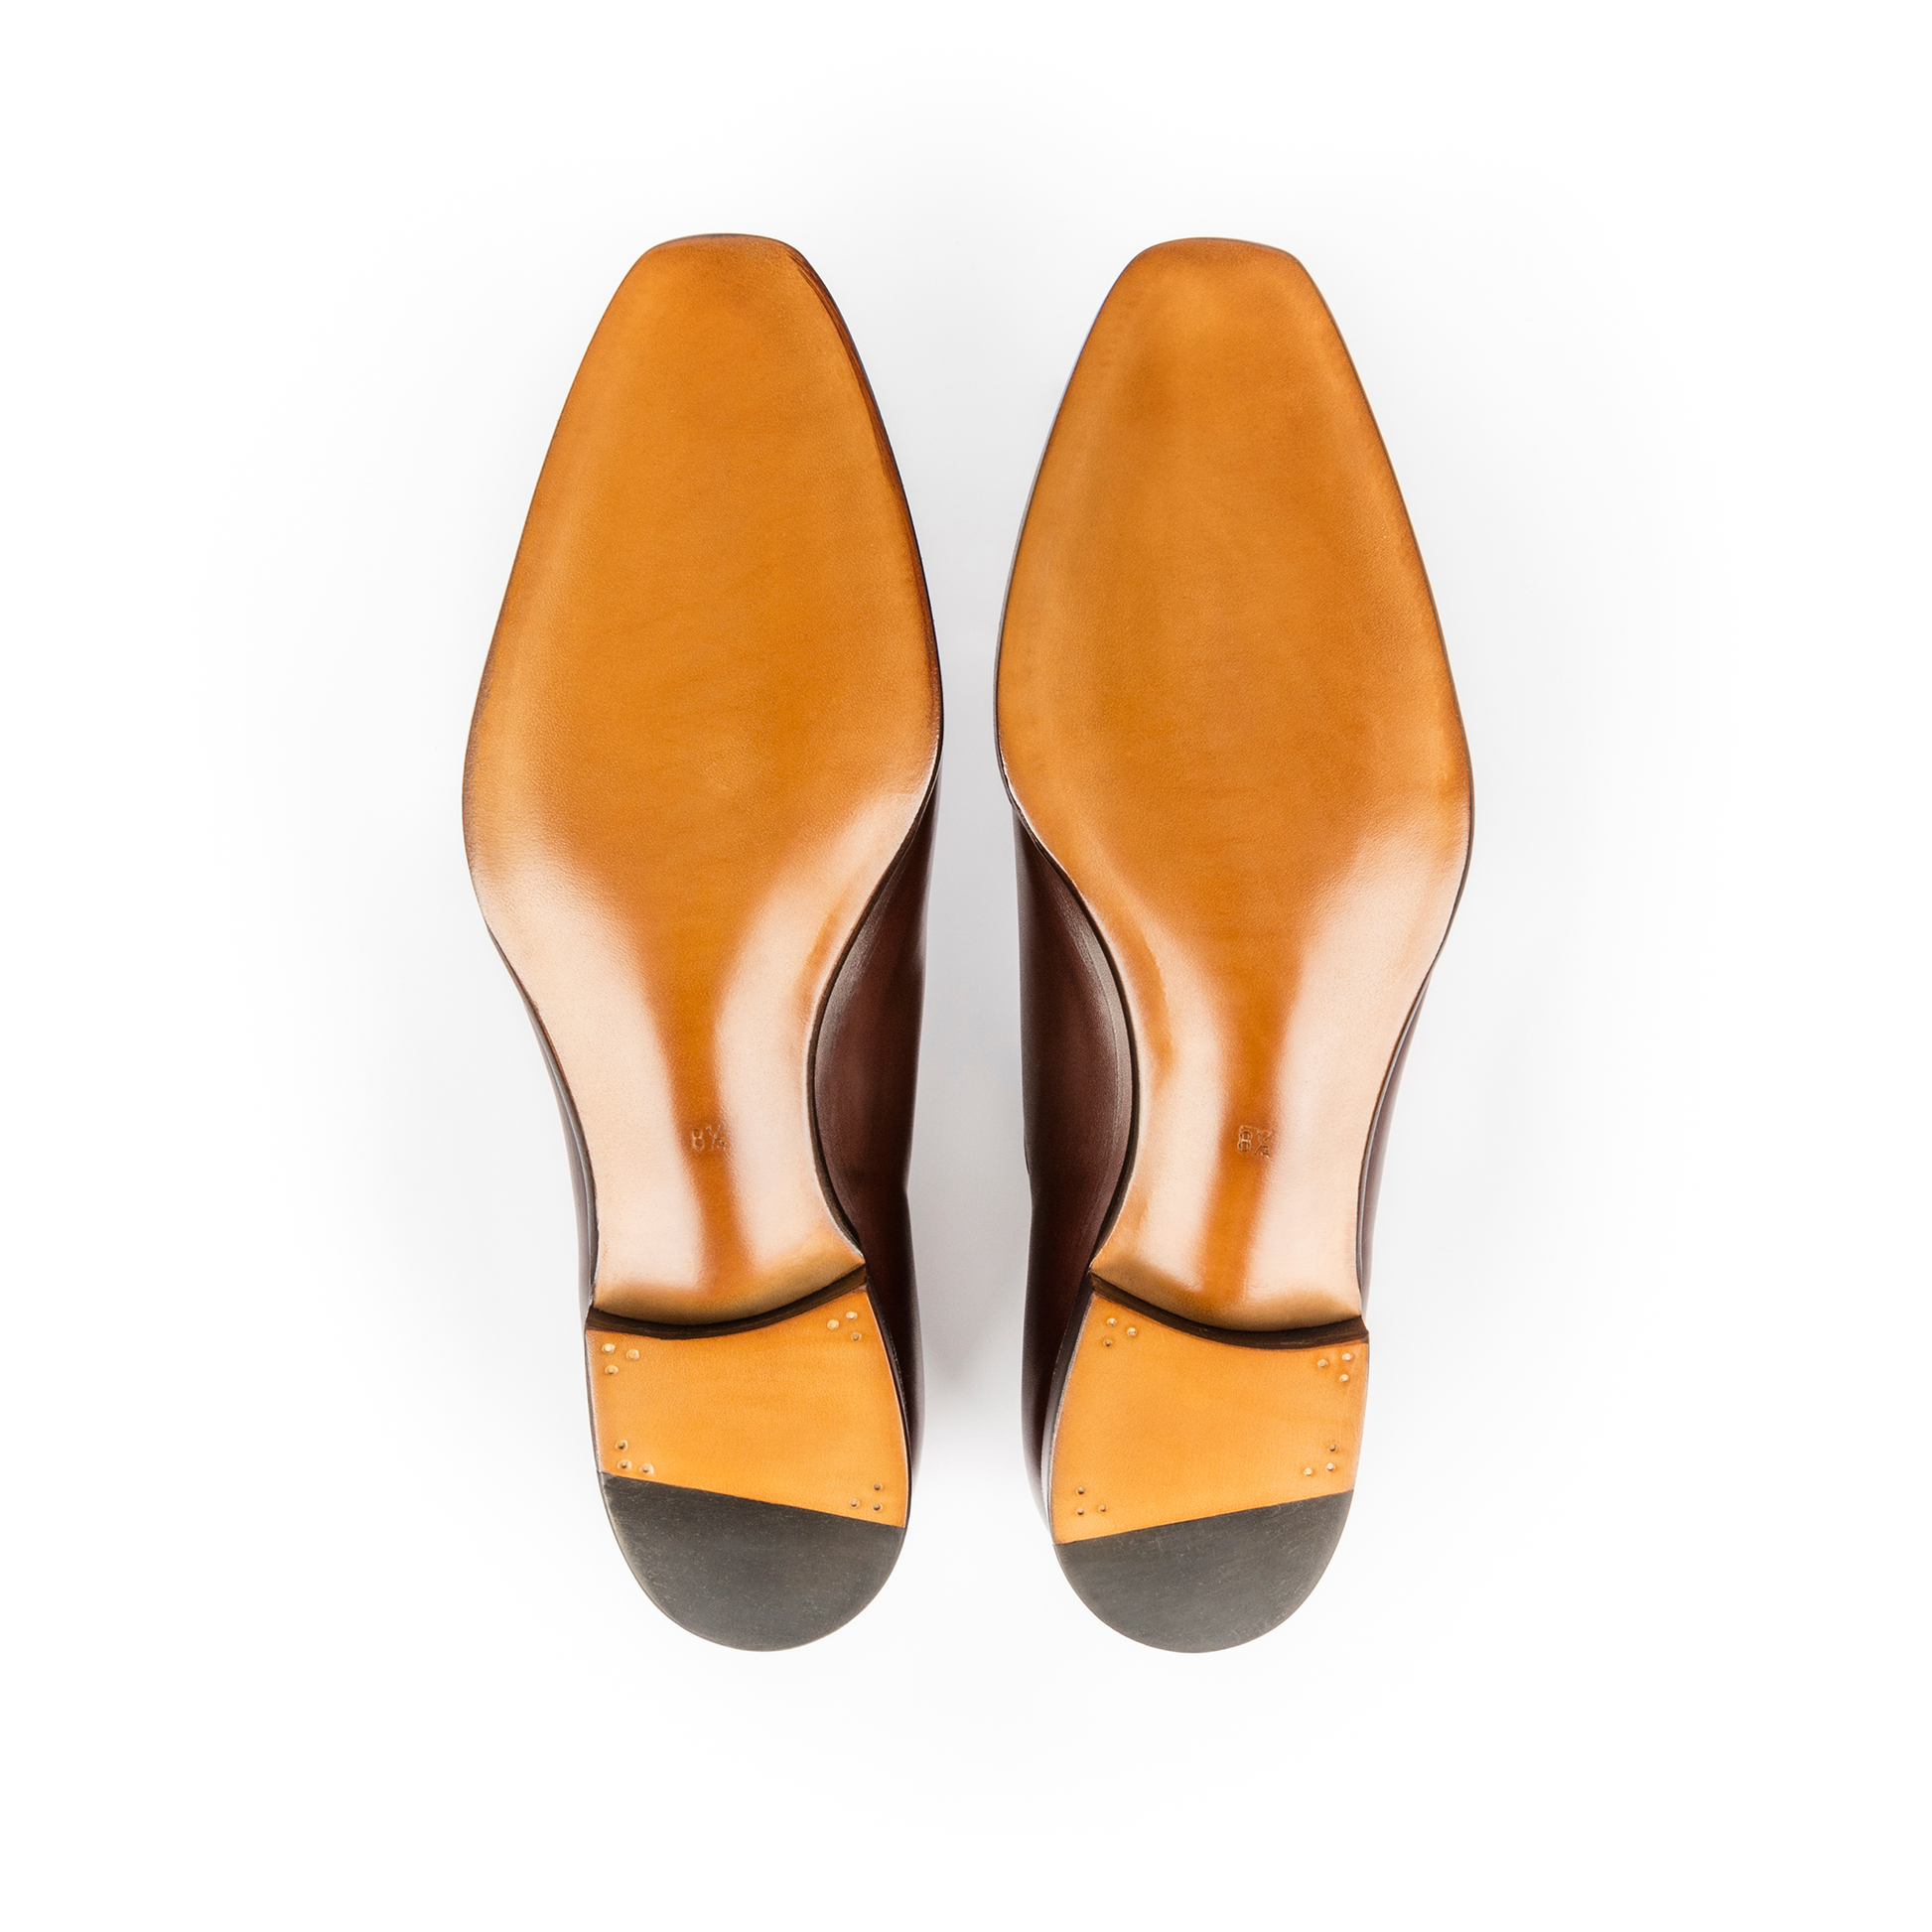 TLB Mallorca leather shoes 192 / VAN GOGH / VEGANO DARK BROWN